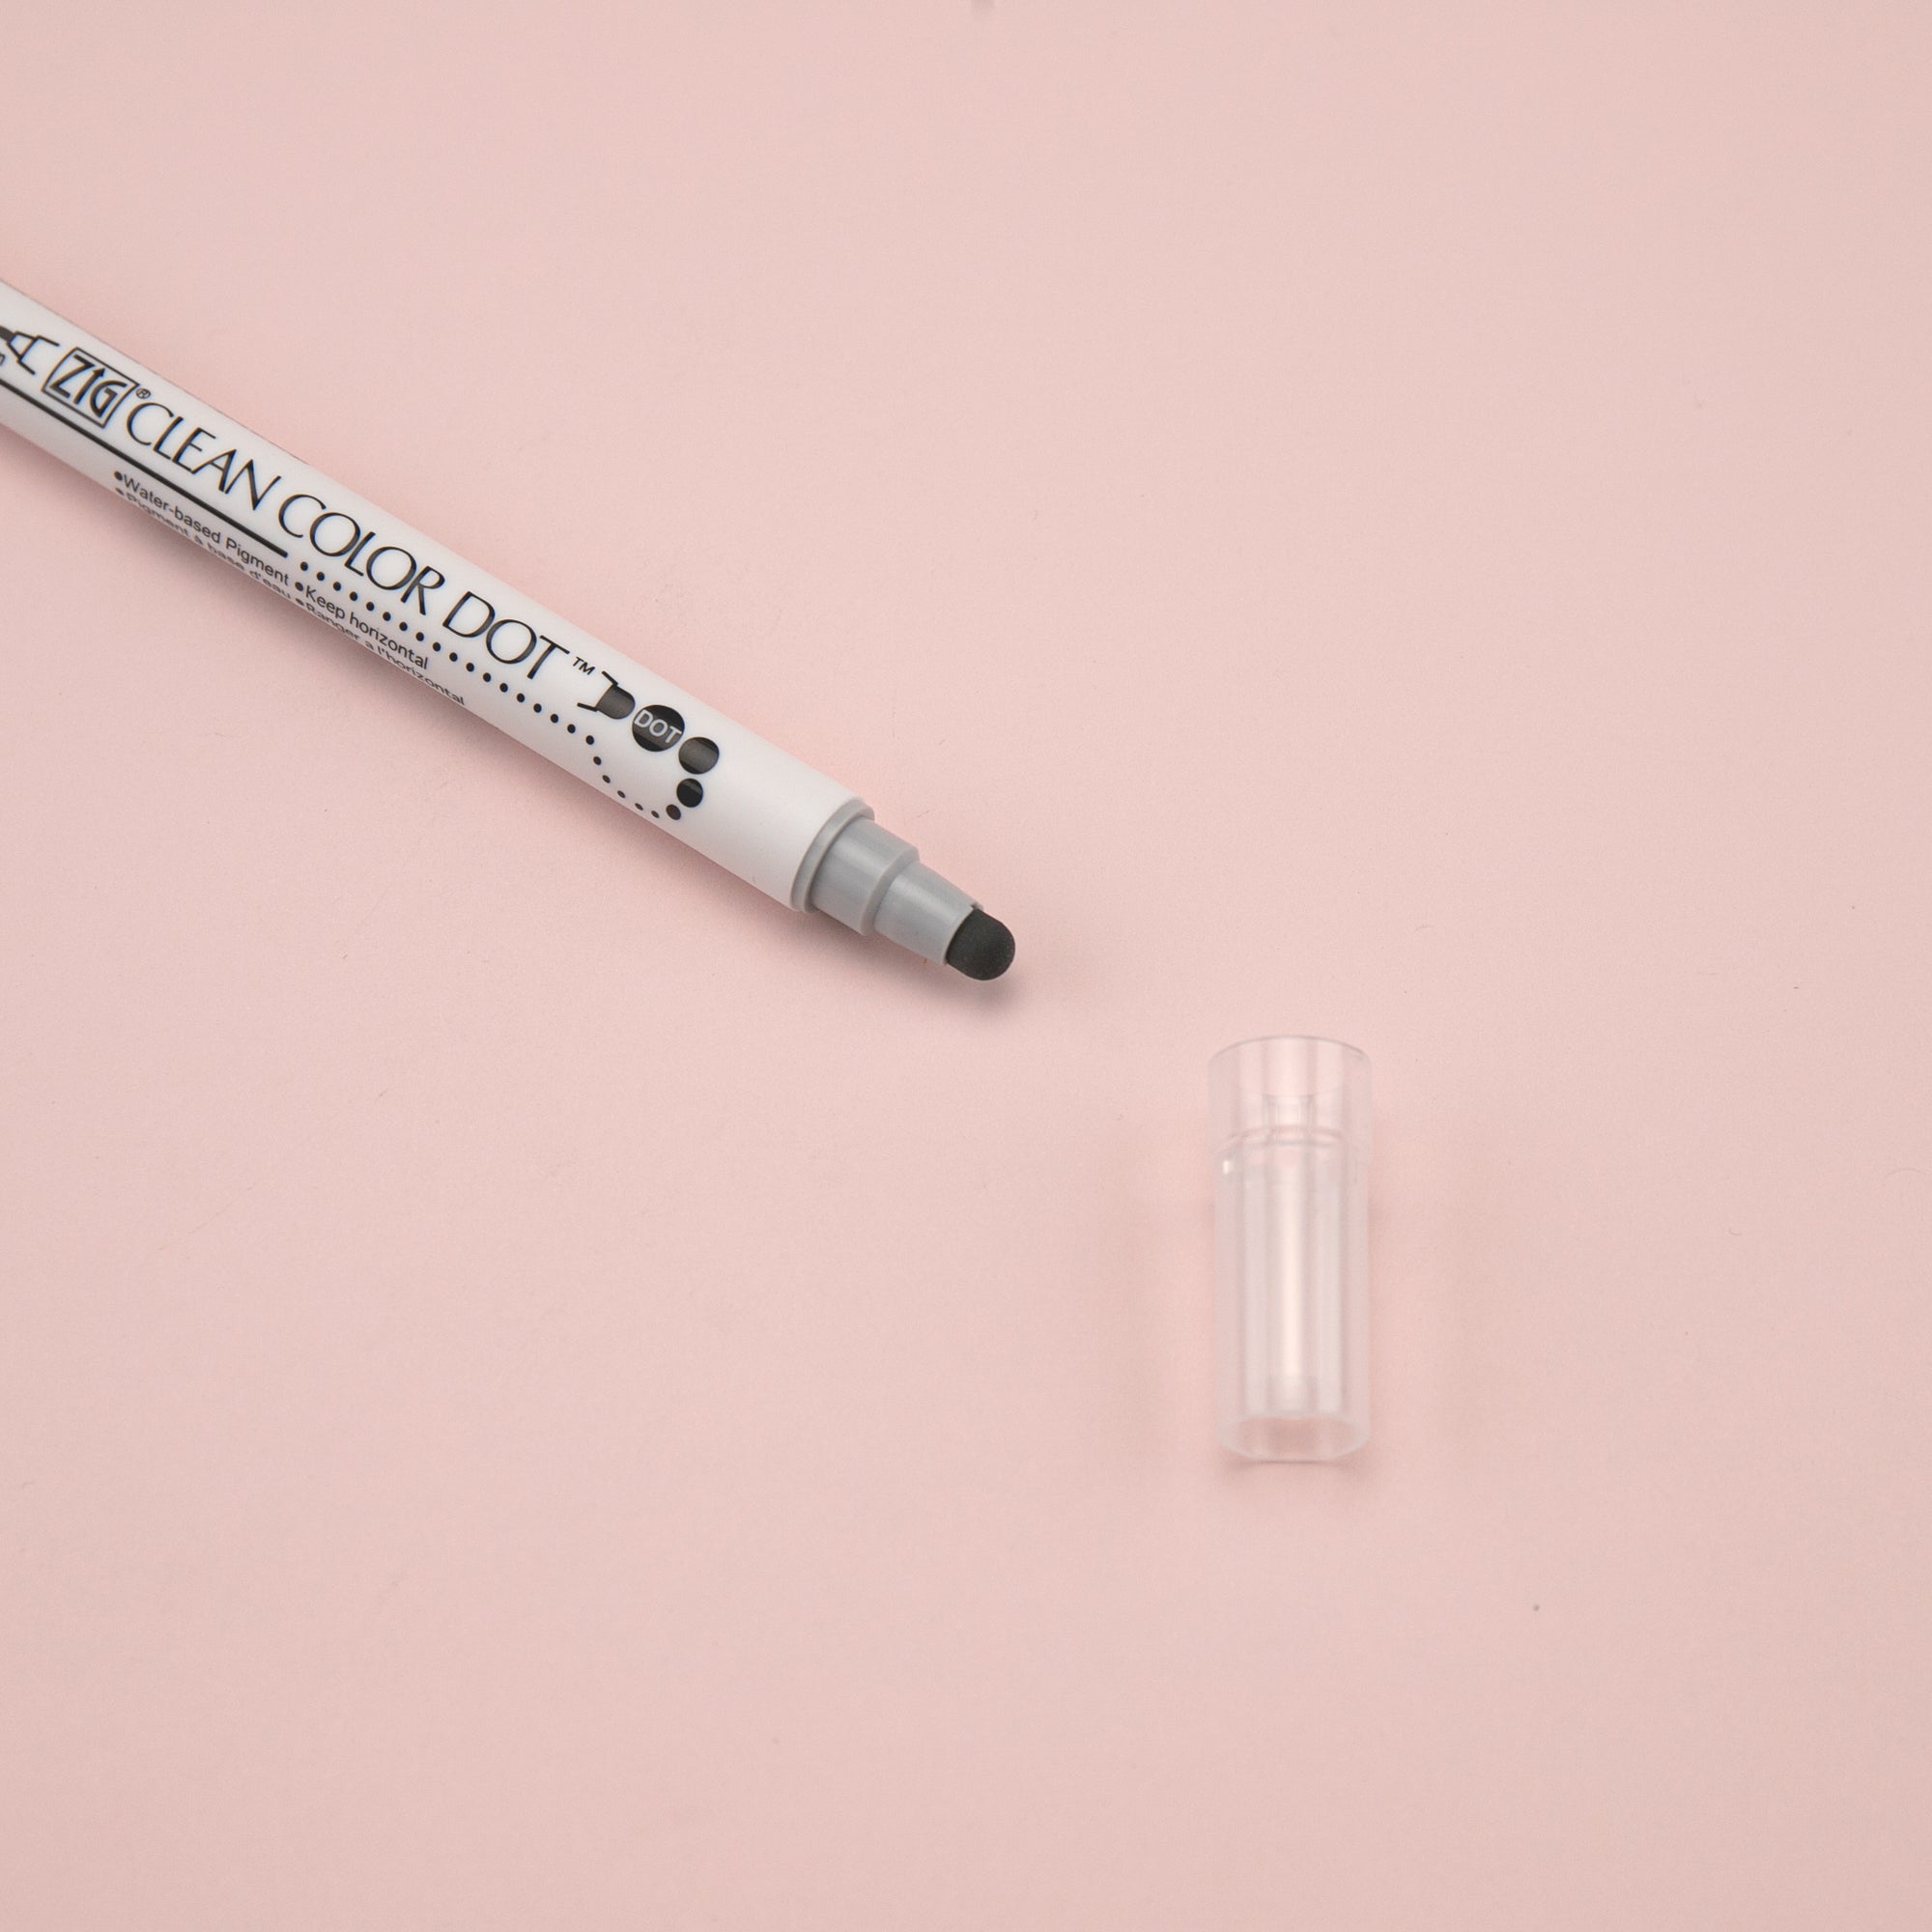 Kuretake ZIG CLEAN COLOR DOT Pens, AP-Certified, Ideal for Marking